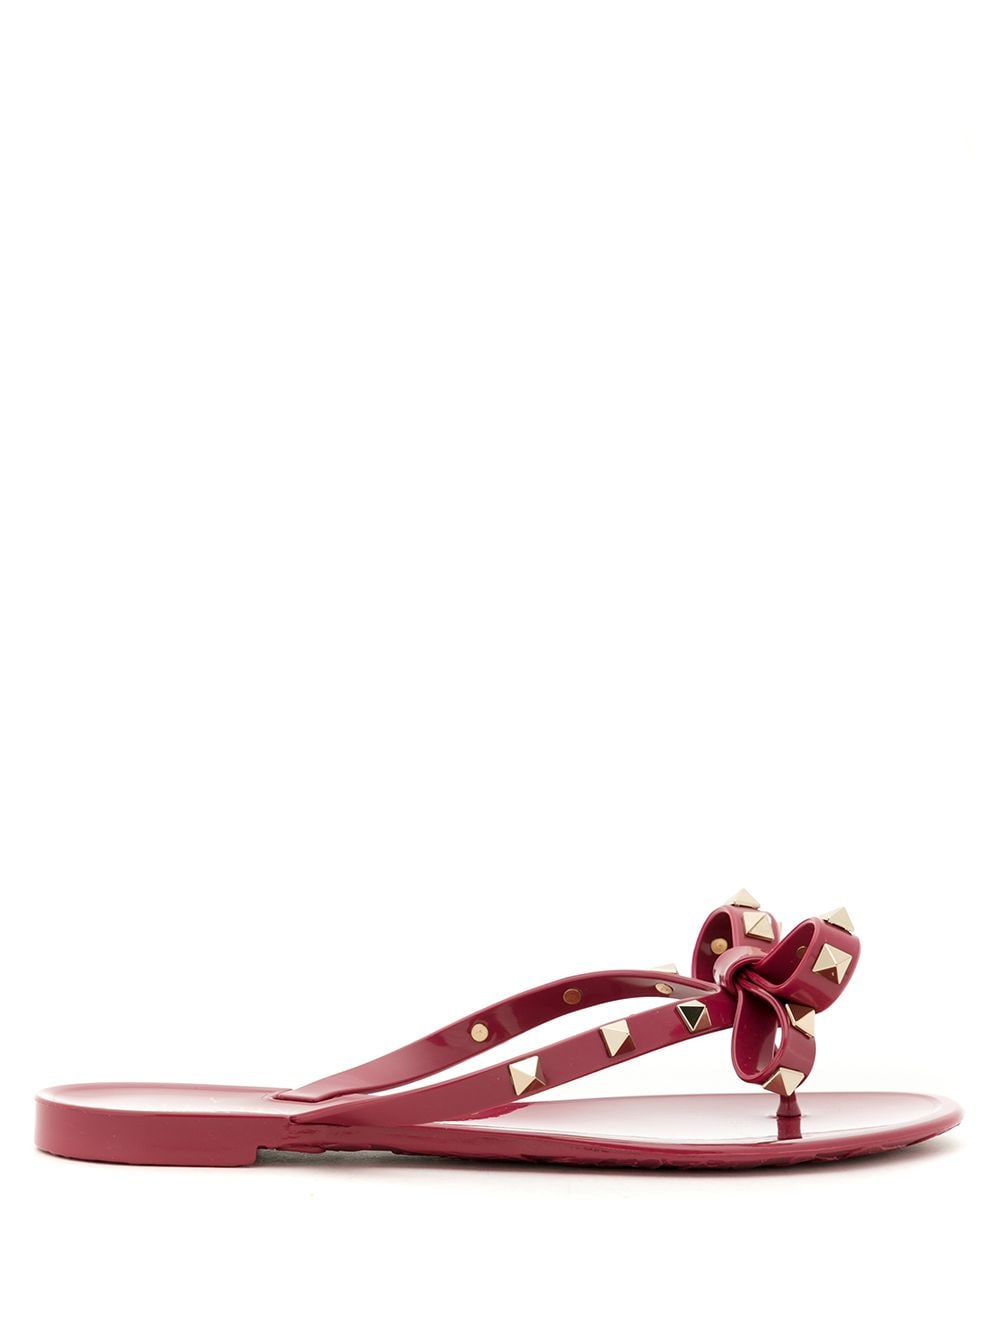 Valentino Garavani Rockstud Bow Jelly Sandals In Red